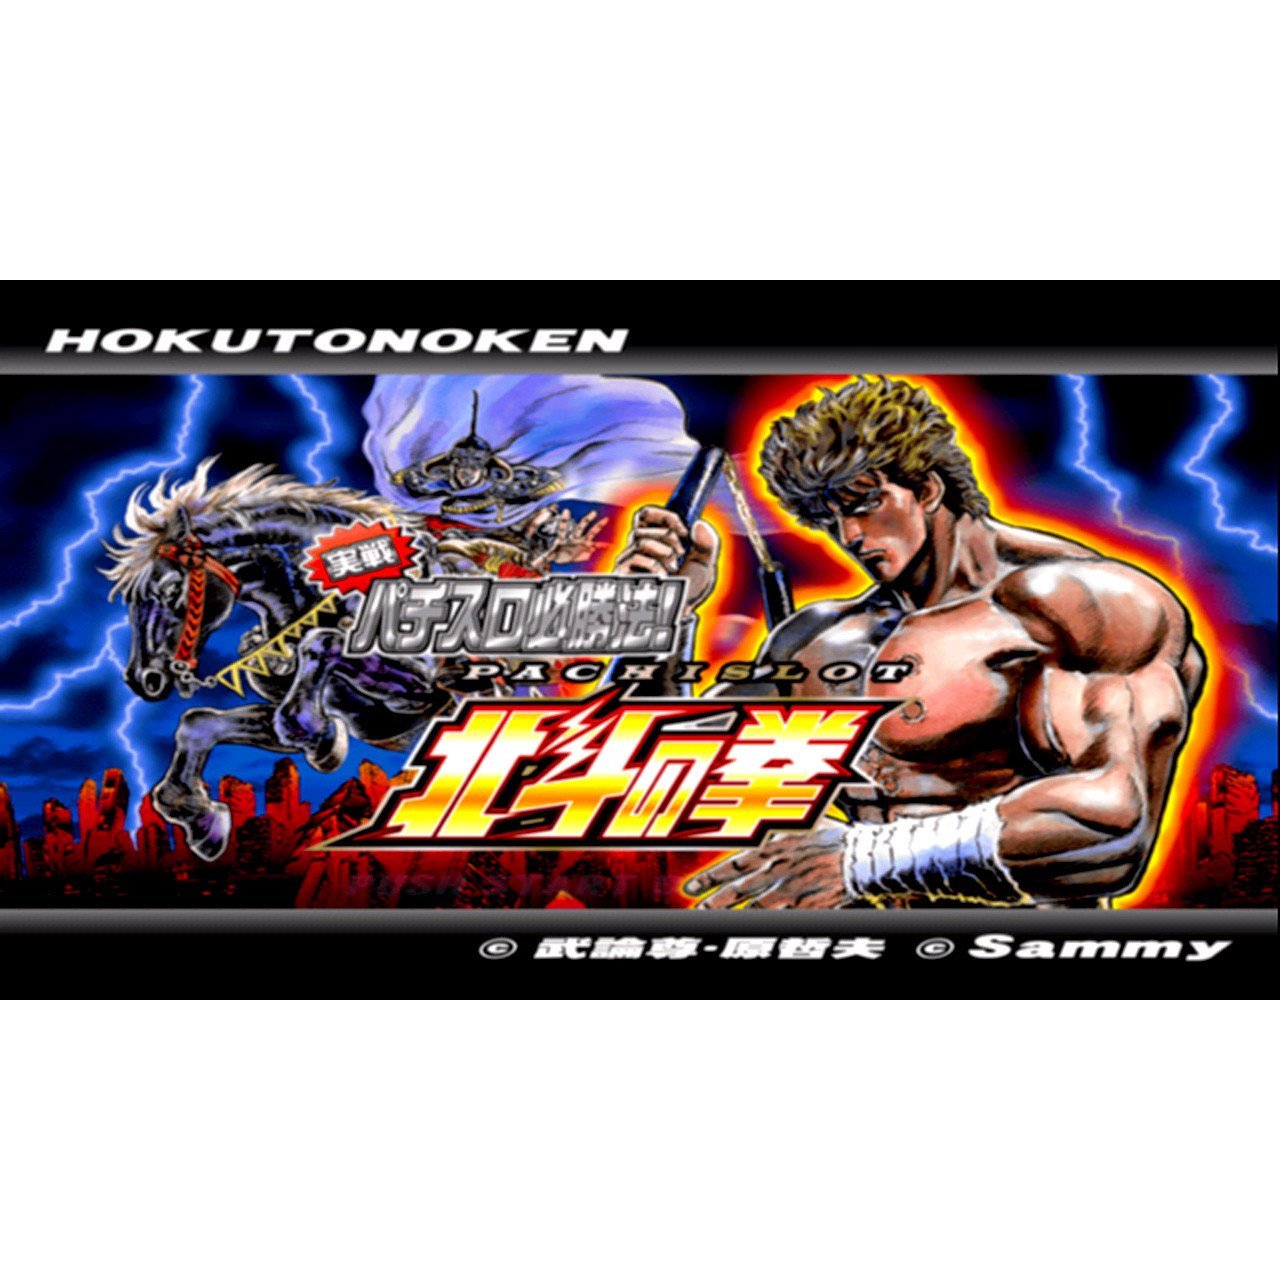 Jissen Pachi-Slot Hisshouhou: Hokuto no Ken Import Sony PlayStation 2 Game - Titlescreen